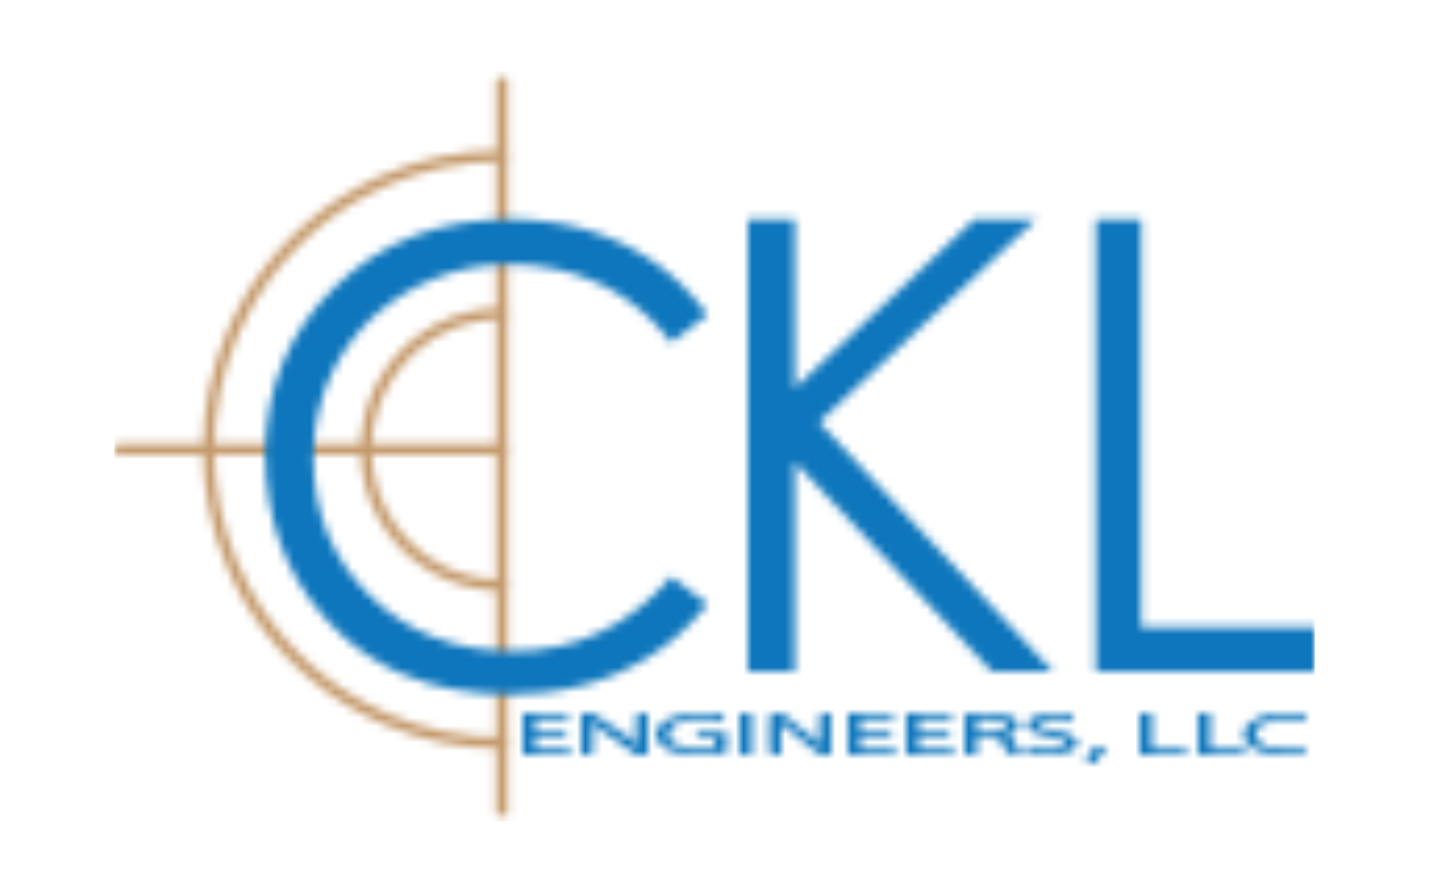 Engineering Firm CKL Engineers, LLC logo